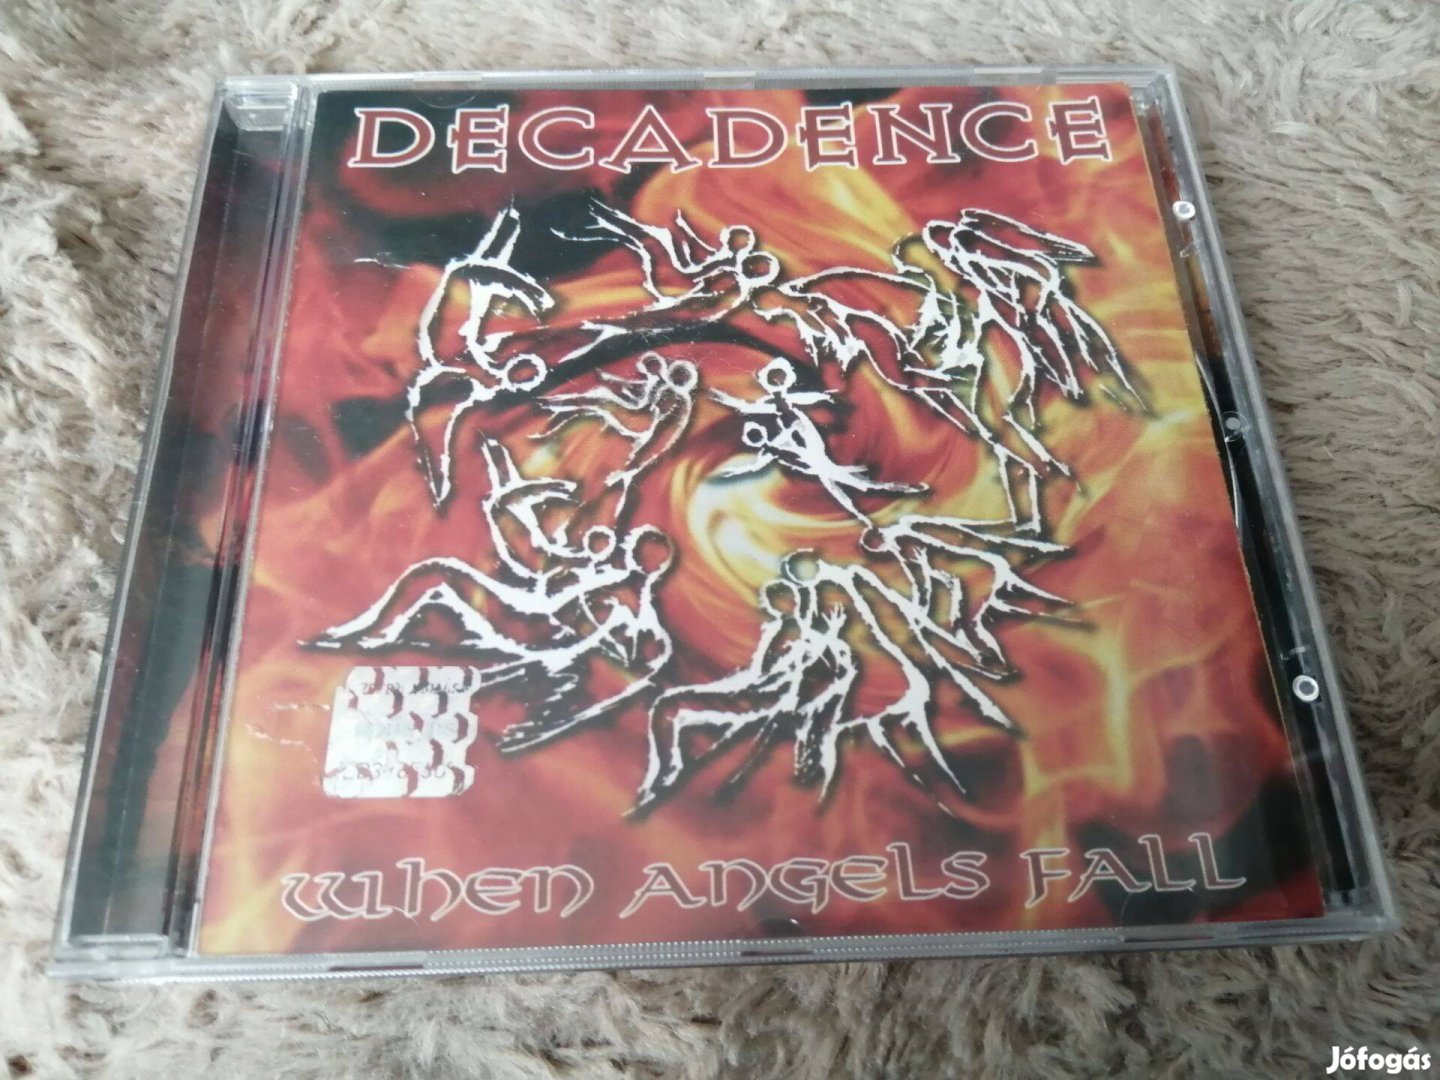 Decadence CD